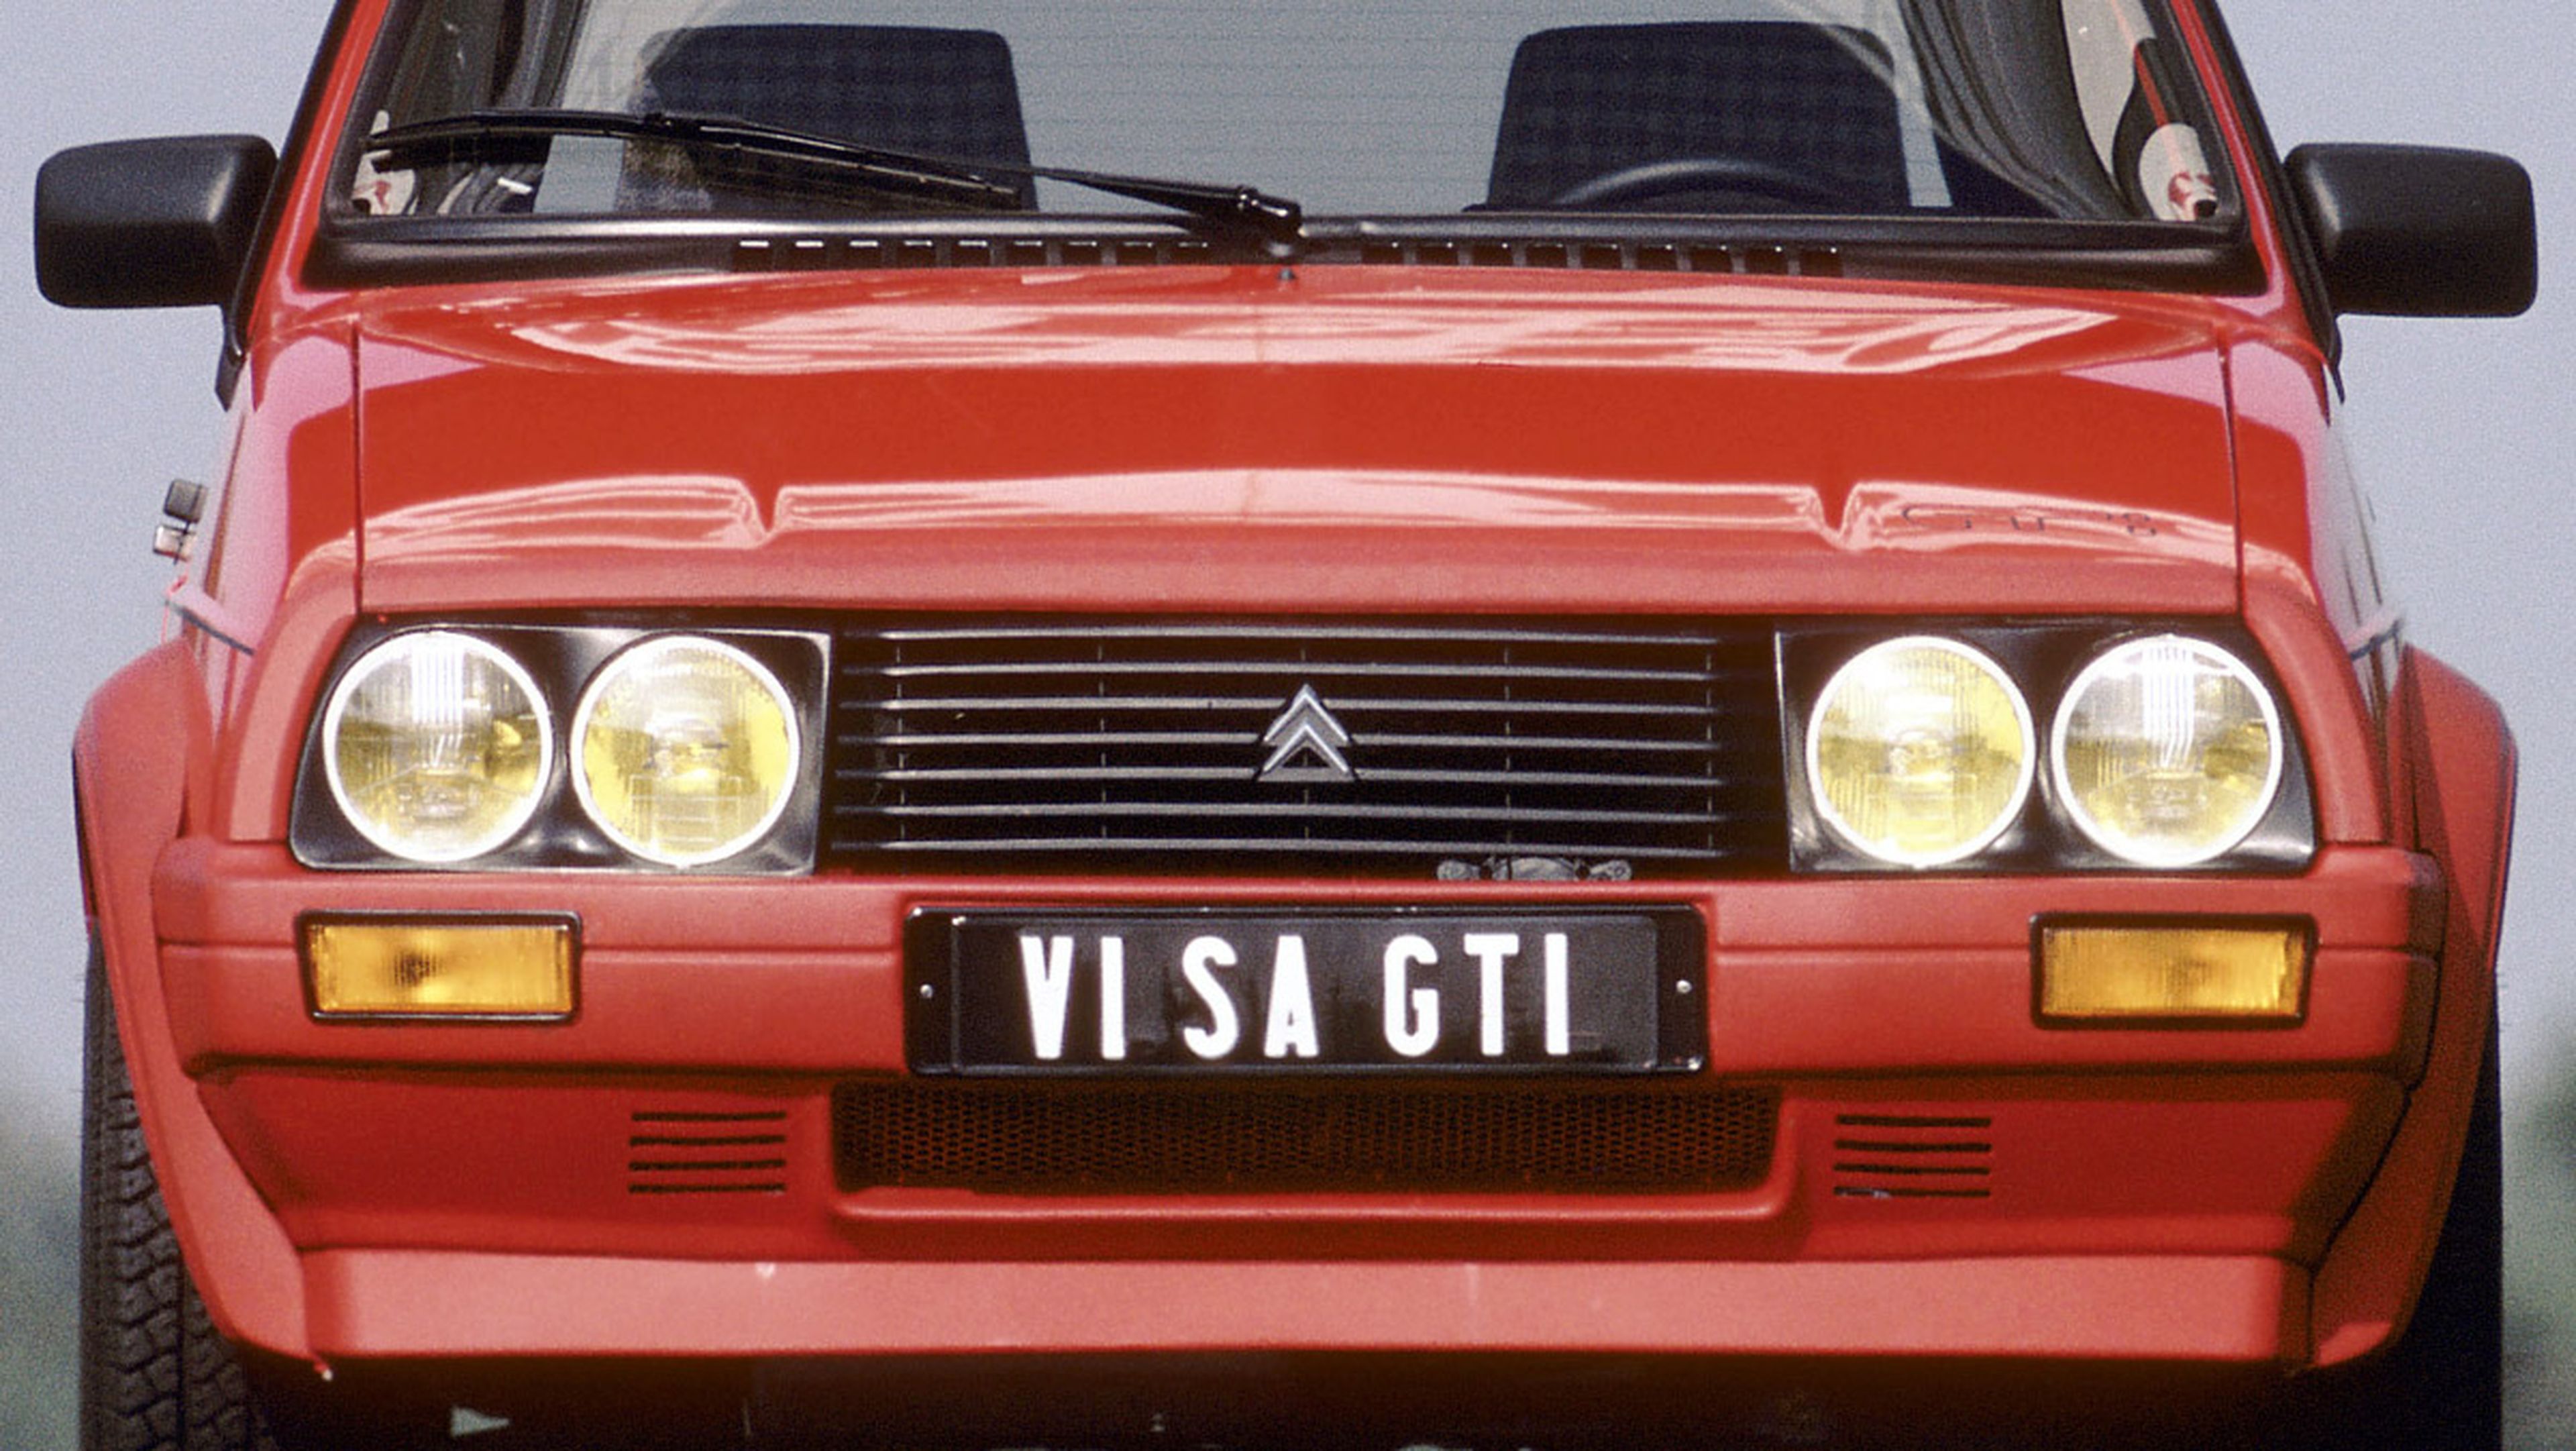 Citroën Visa GTi